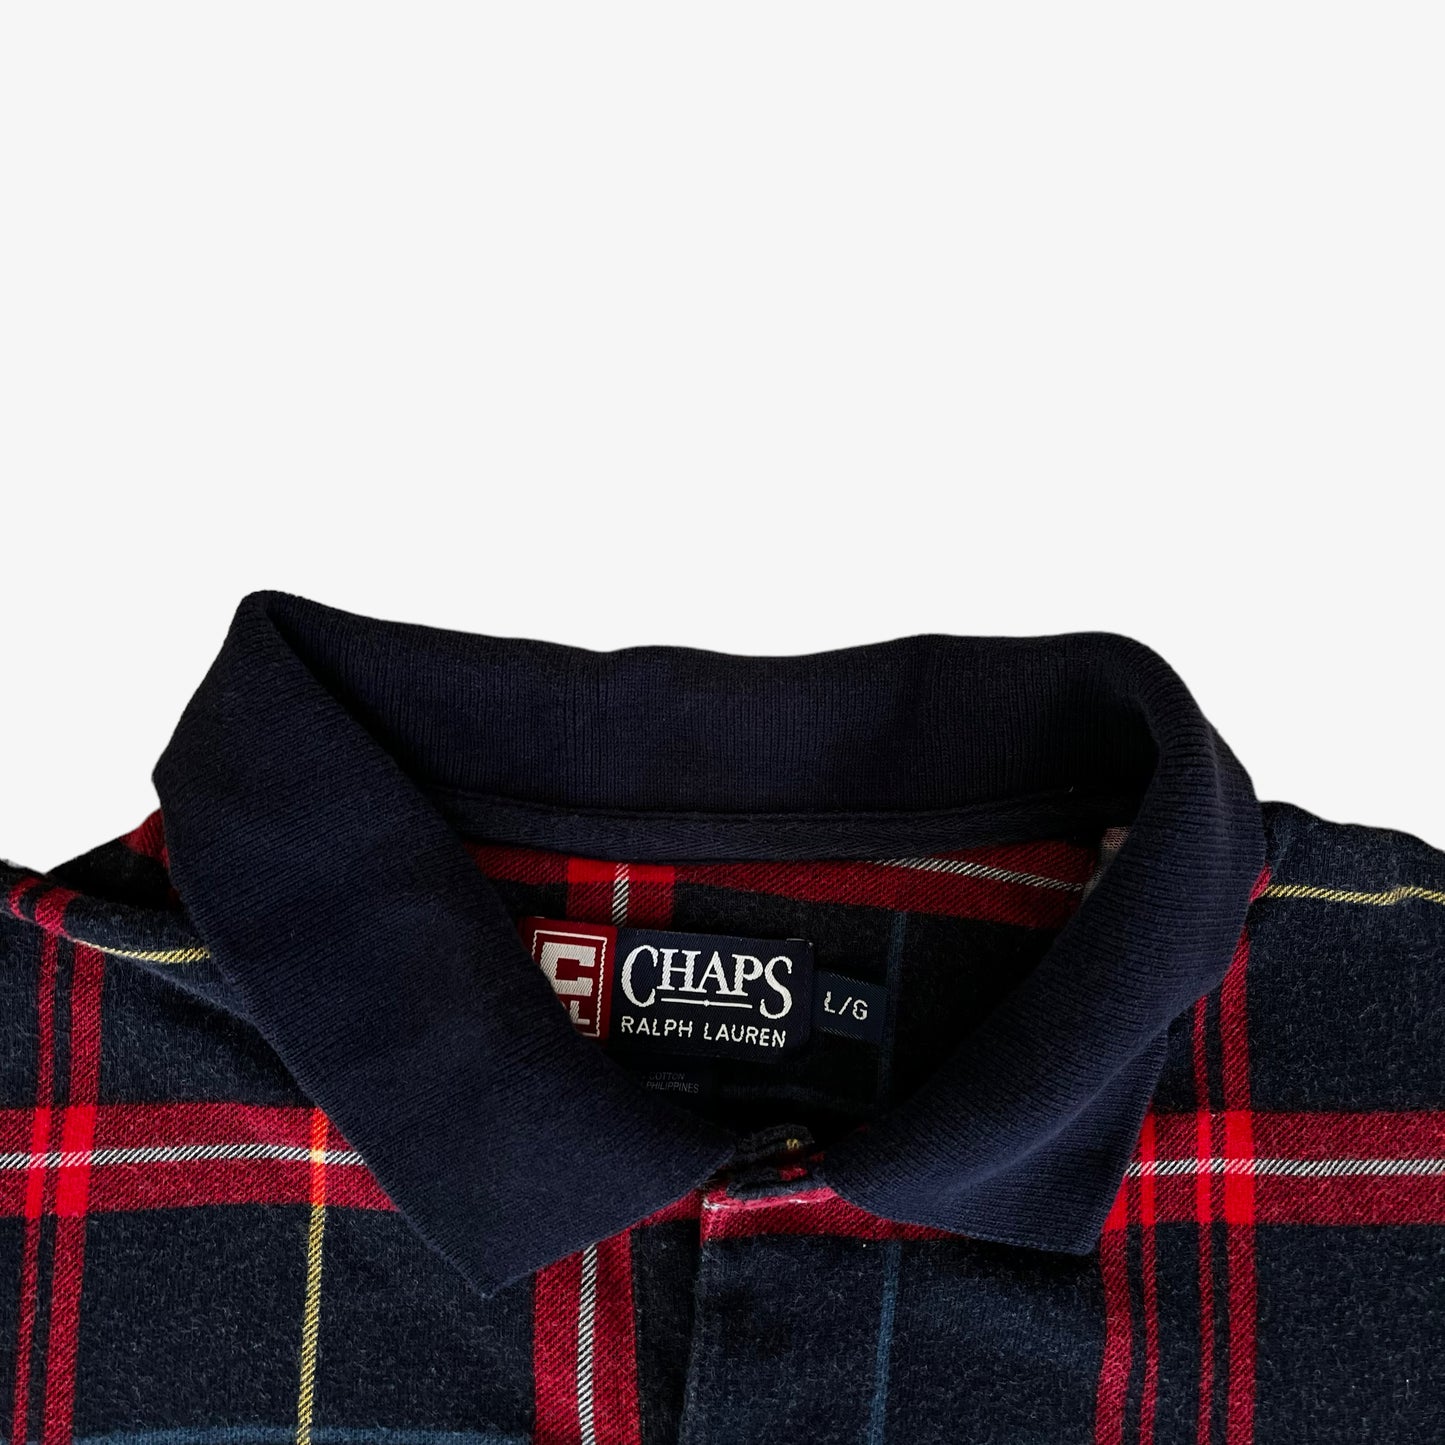 Vintage 90s Ralph Lauren Chaps Tartan Check Polo Shirt Label - Casspios Dream